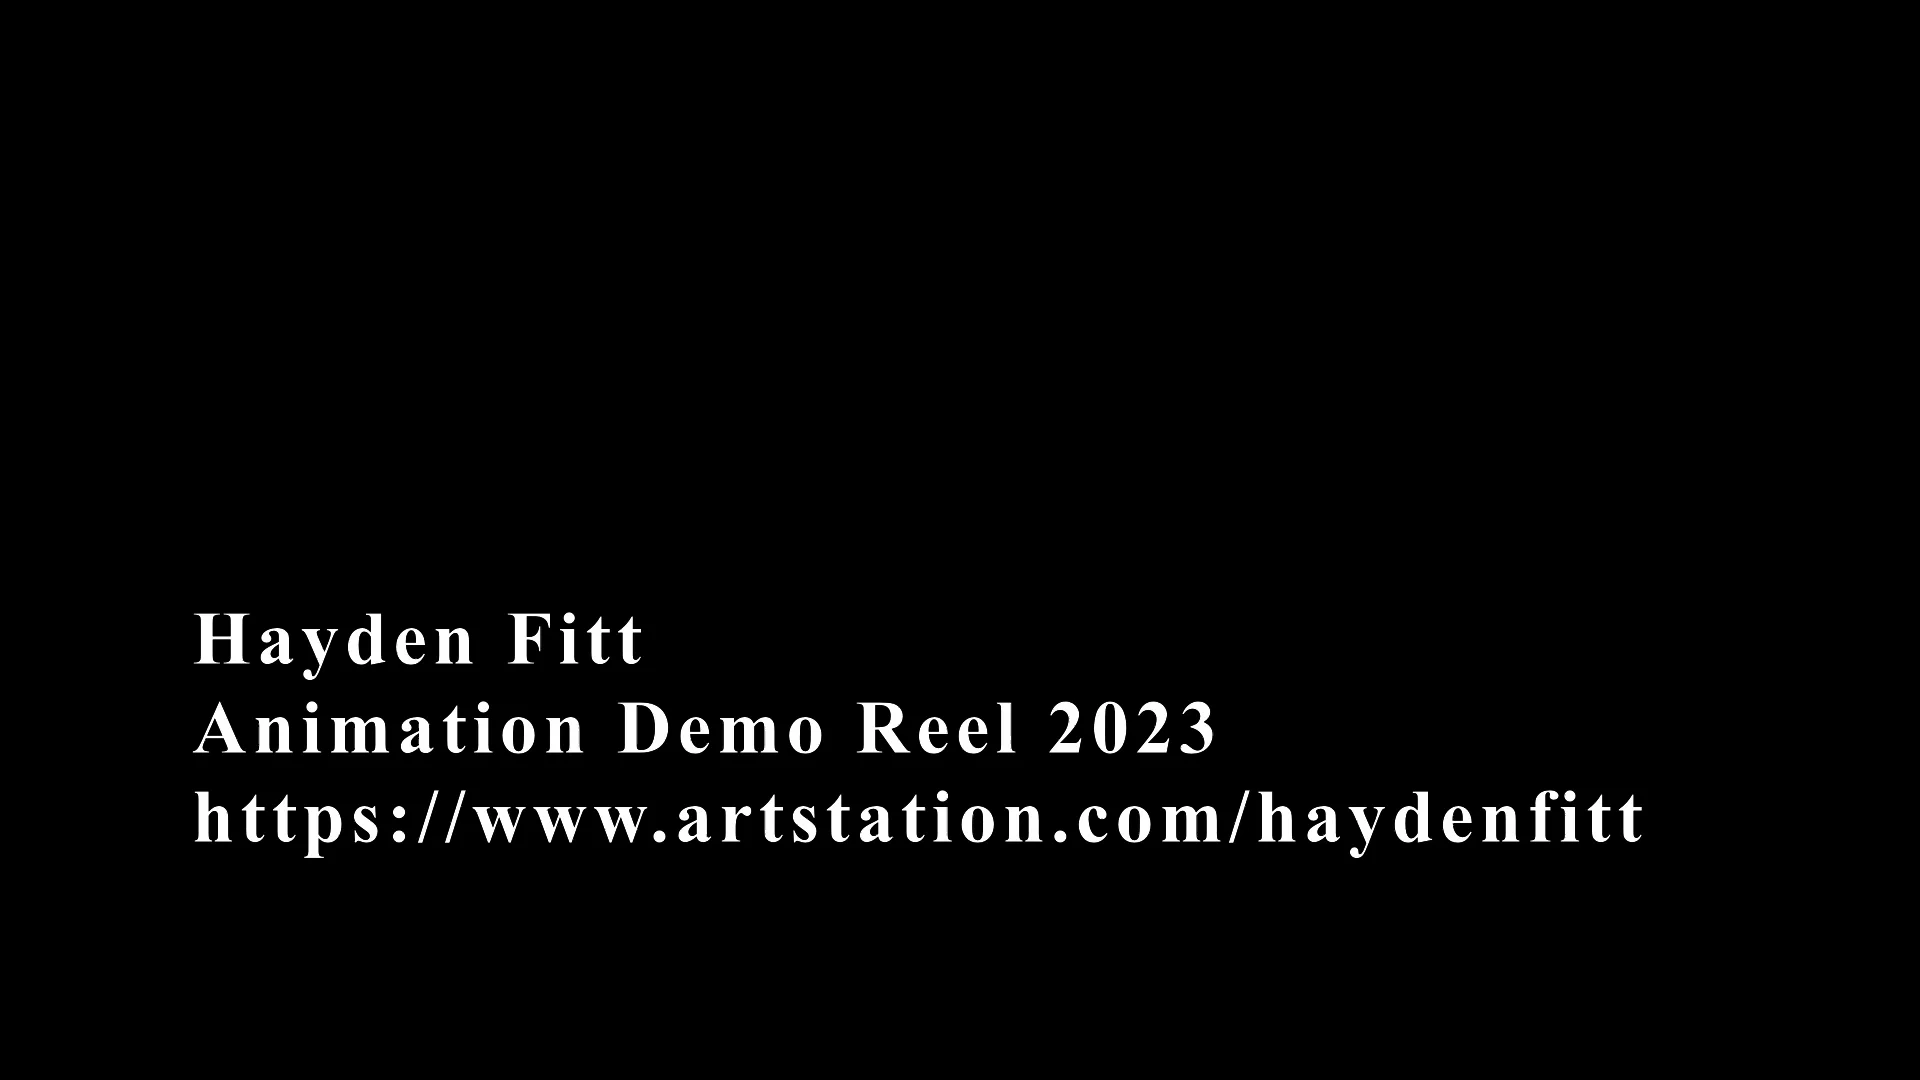 Animation Demo Reel 2023 on Vimeo